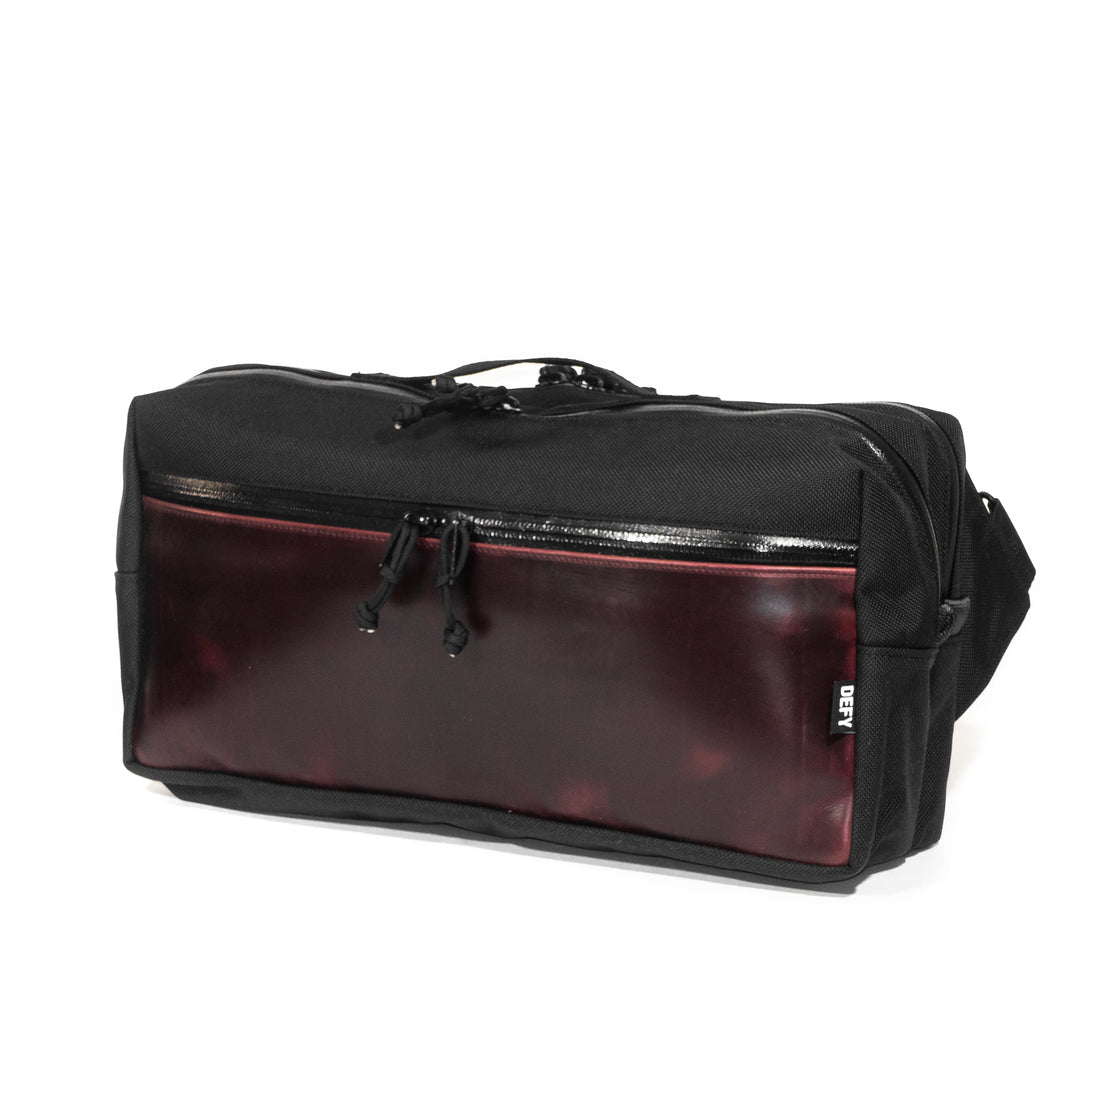 Tether Luggage Strap AustriAlpin™ COBRA® Buckle – DEFY